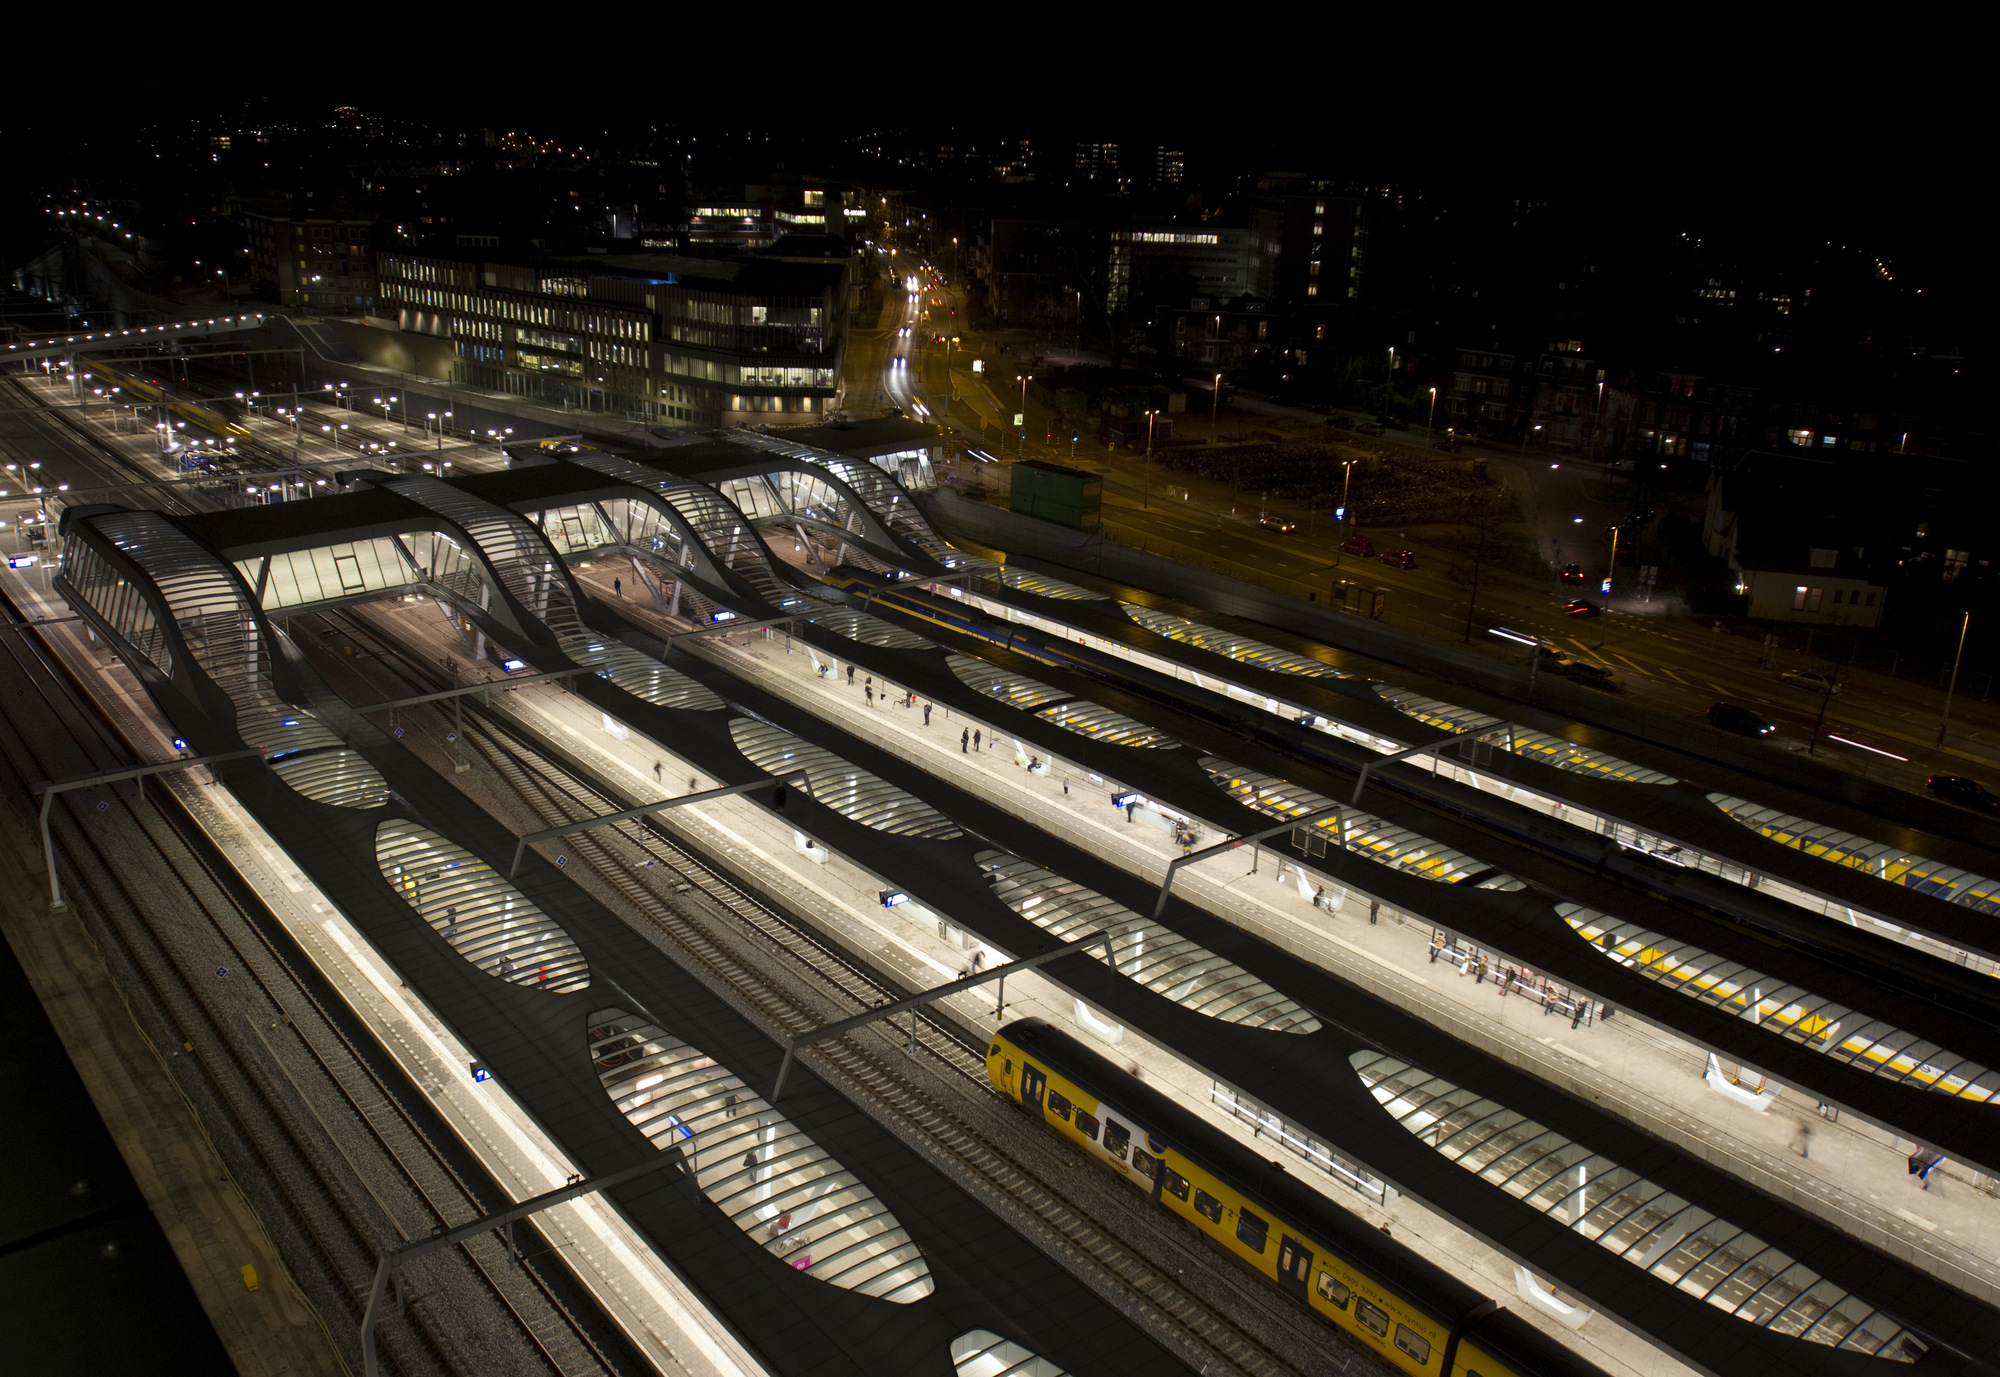 Arnhem Central Platforms win the National Steel Prize 2012 for utility buildings